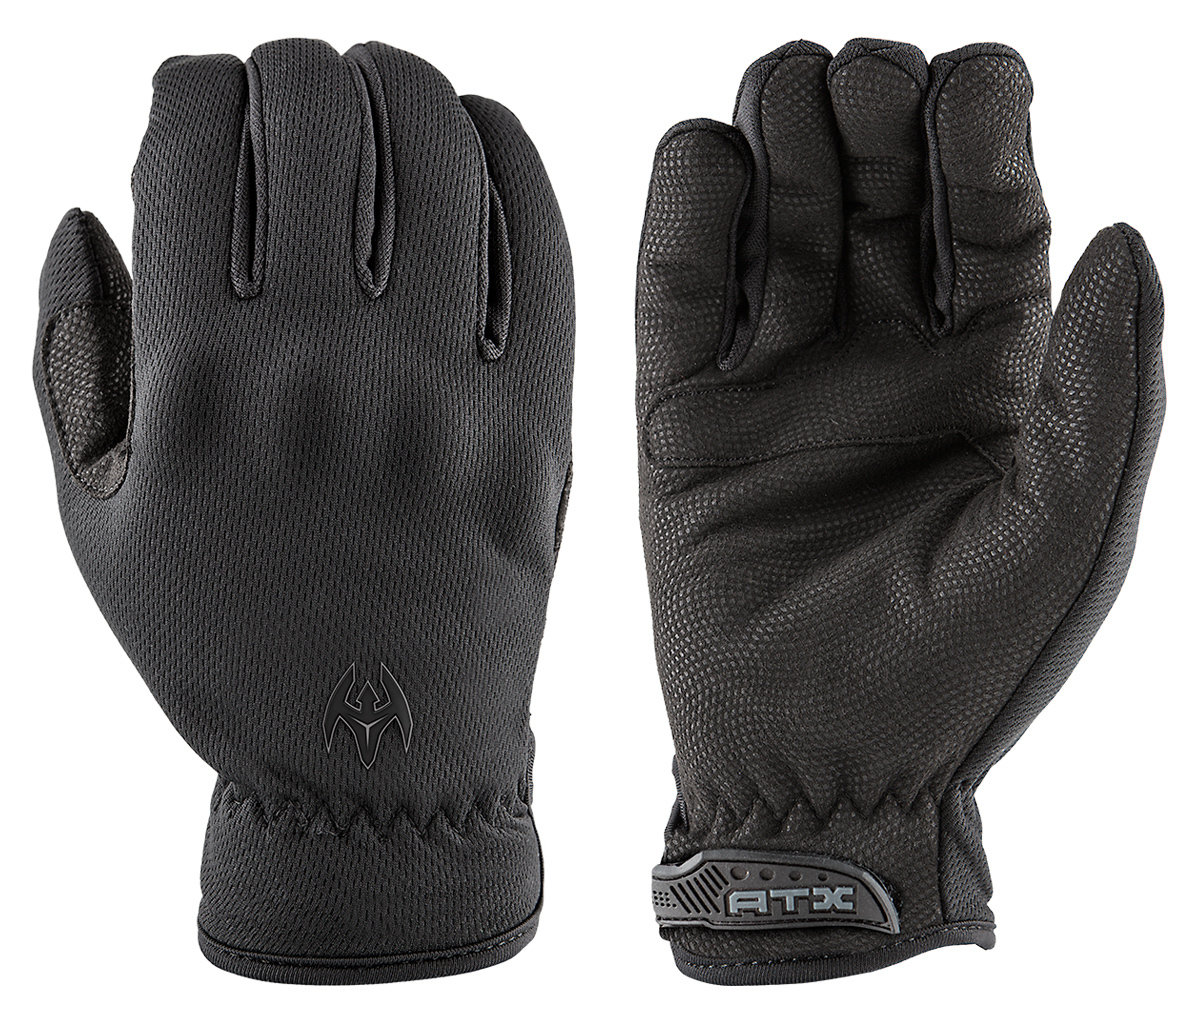 Lightweight Cut Resistant Patrol Gloves